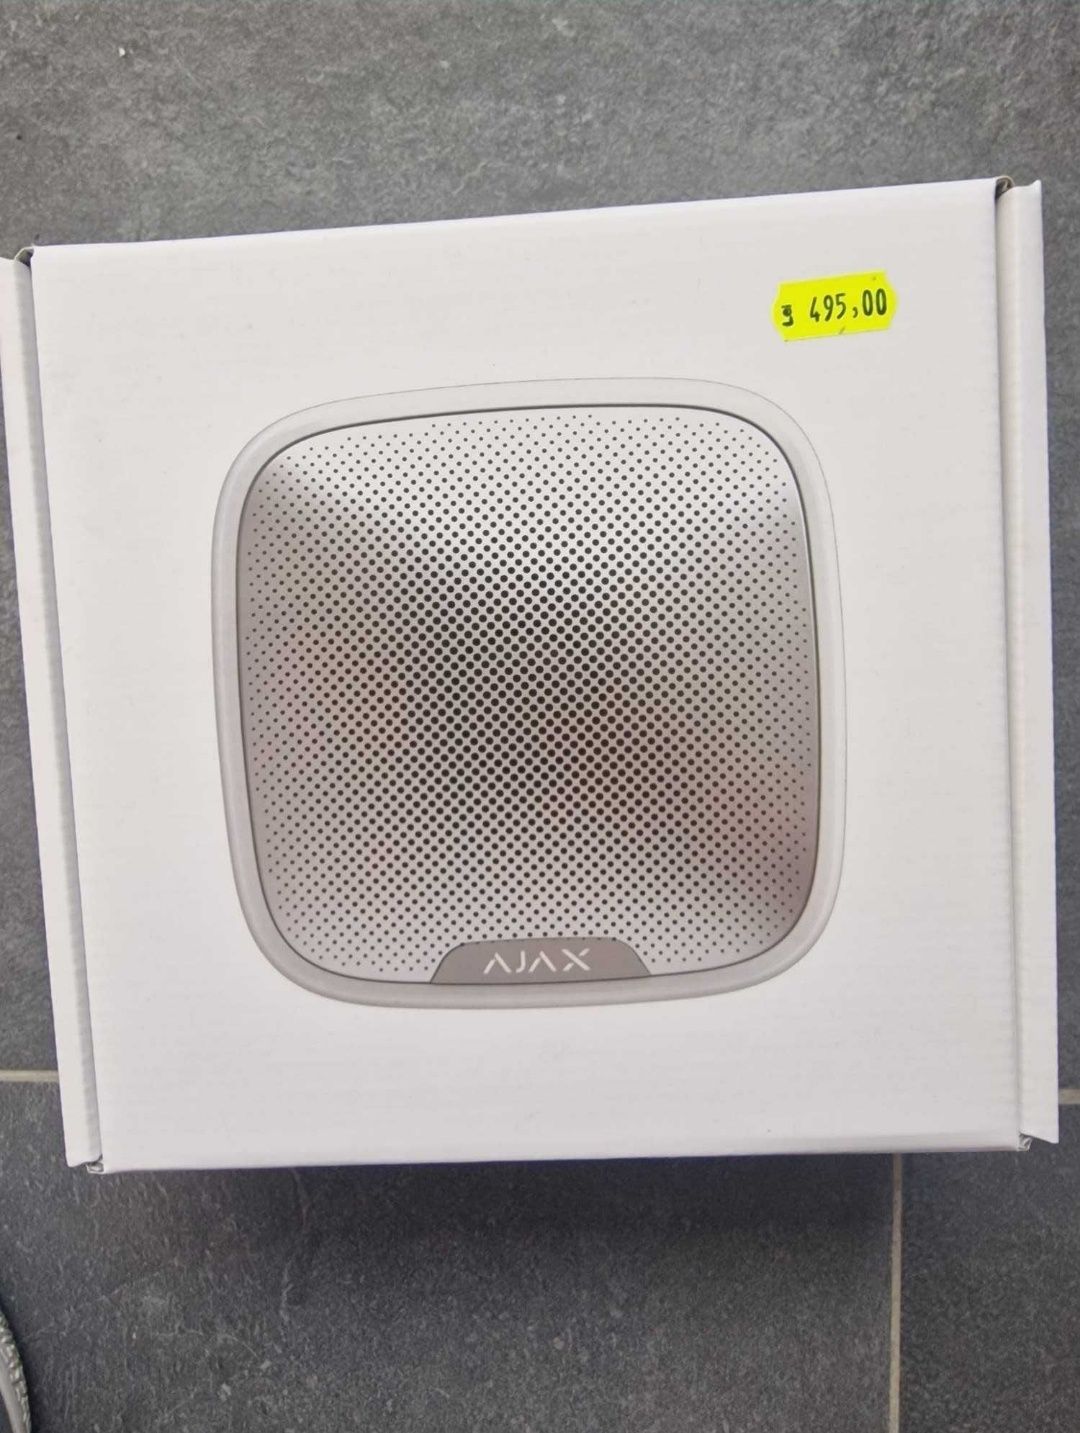 Sistem de alarma Ajax